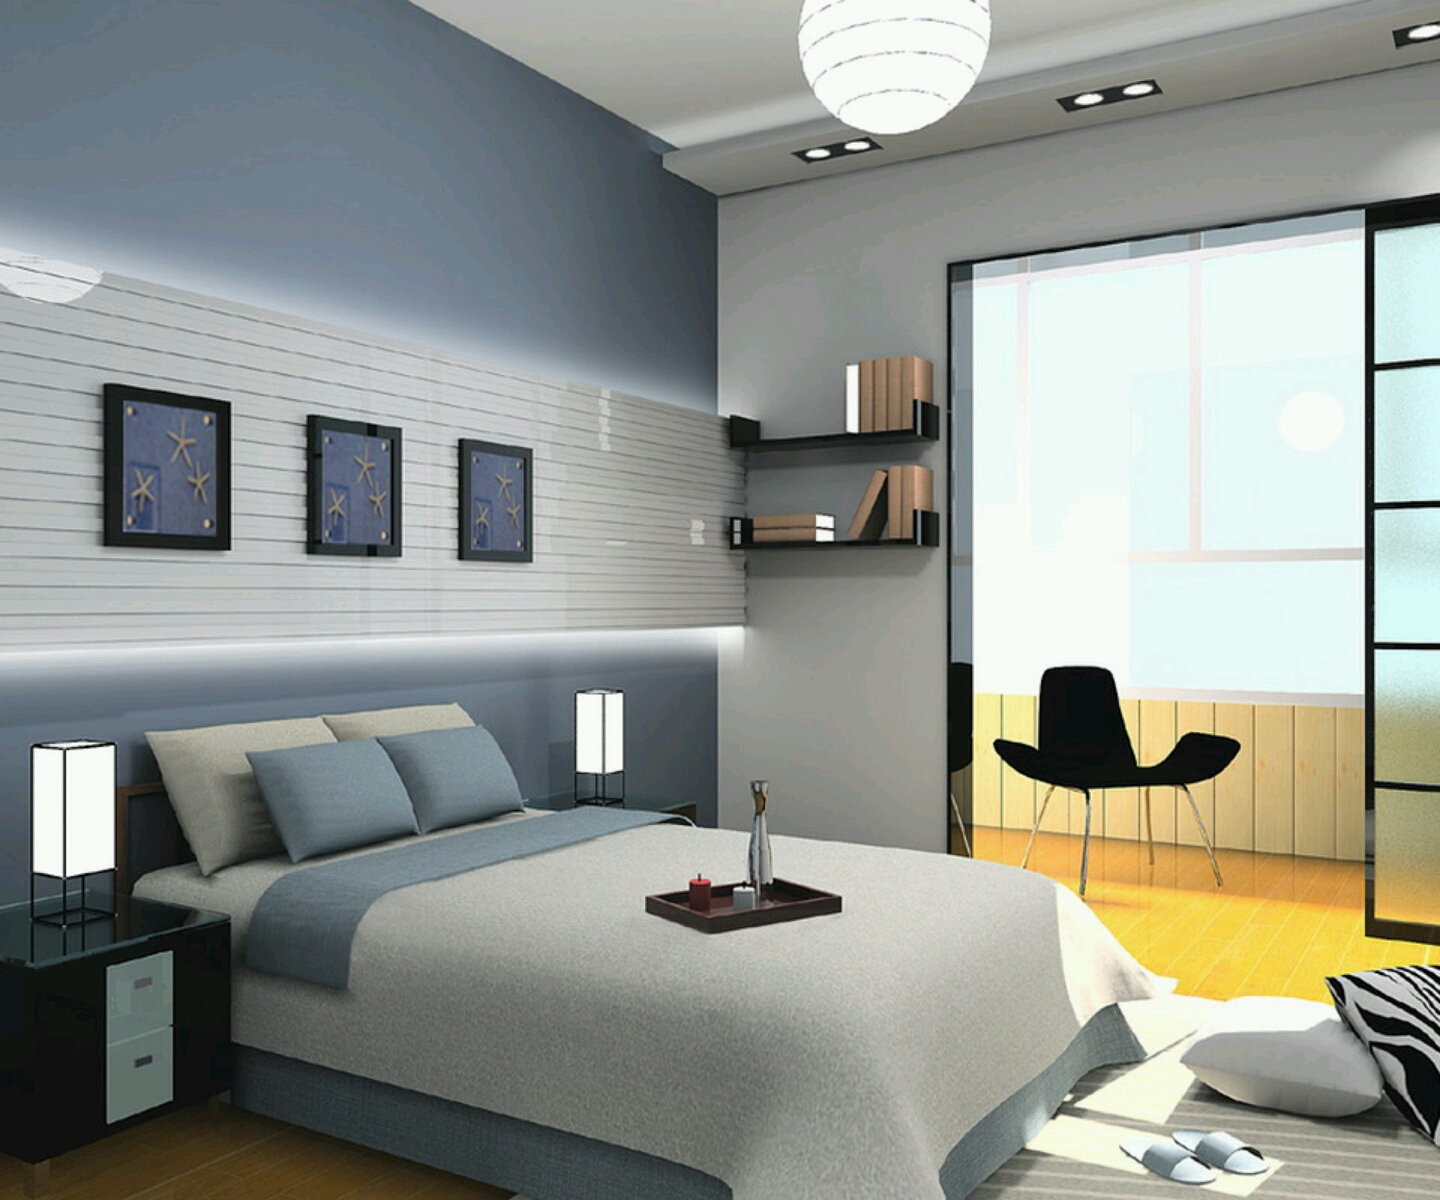 Interior Design For Bedroom Apartment